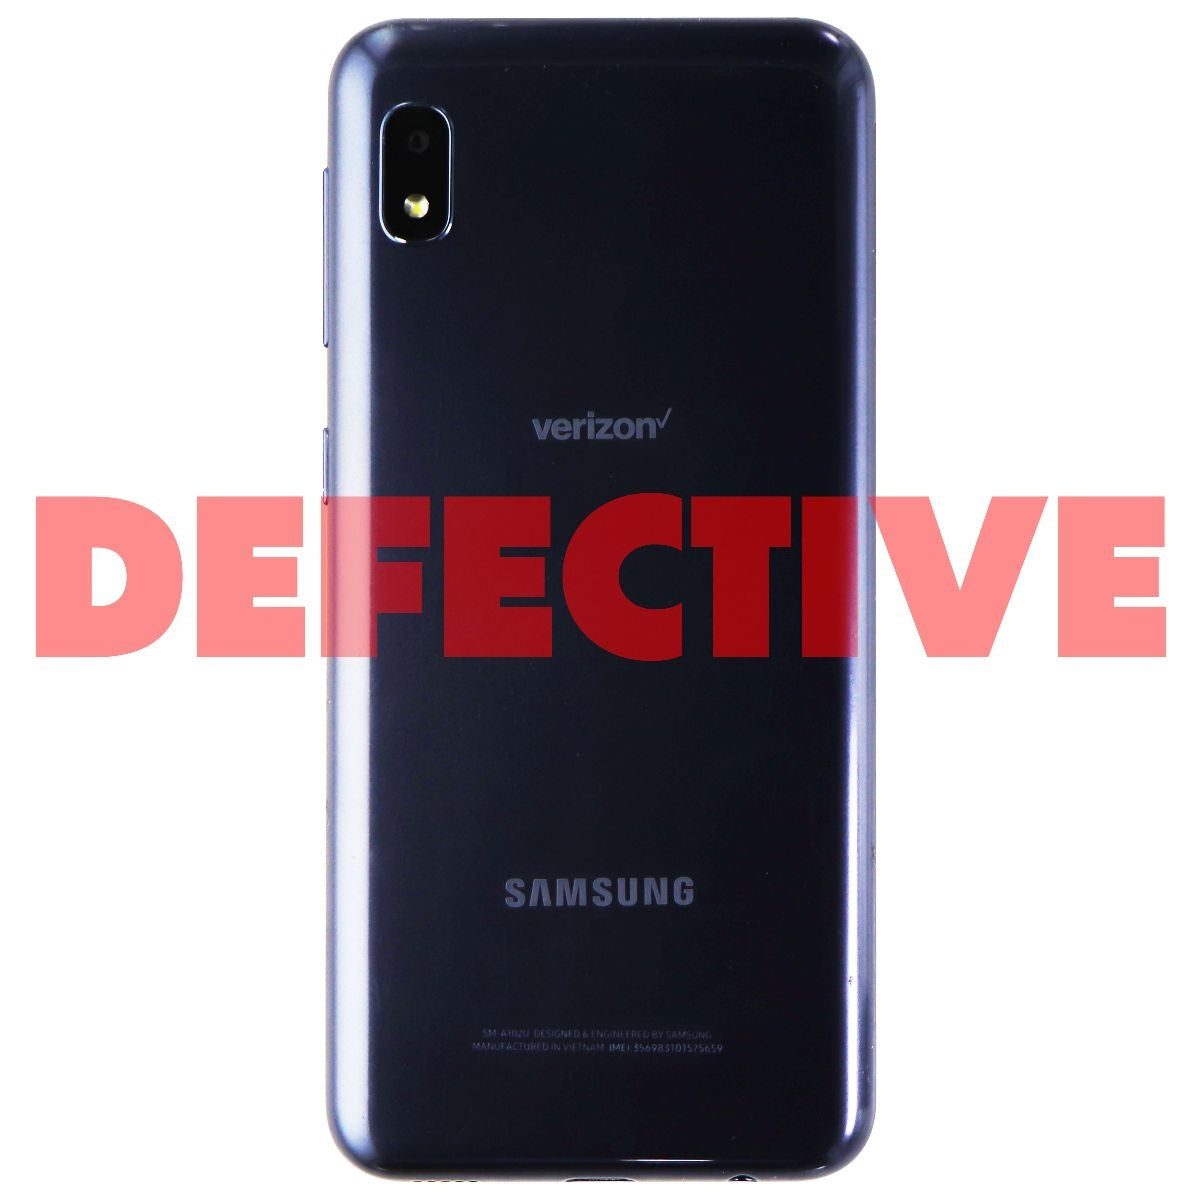 Samsung Galaxy A10e Smartphone (SM-A102U) Verizon Only - 32GB